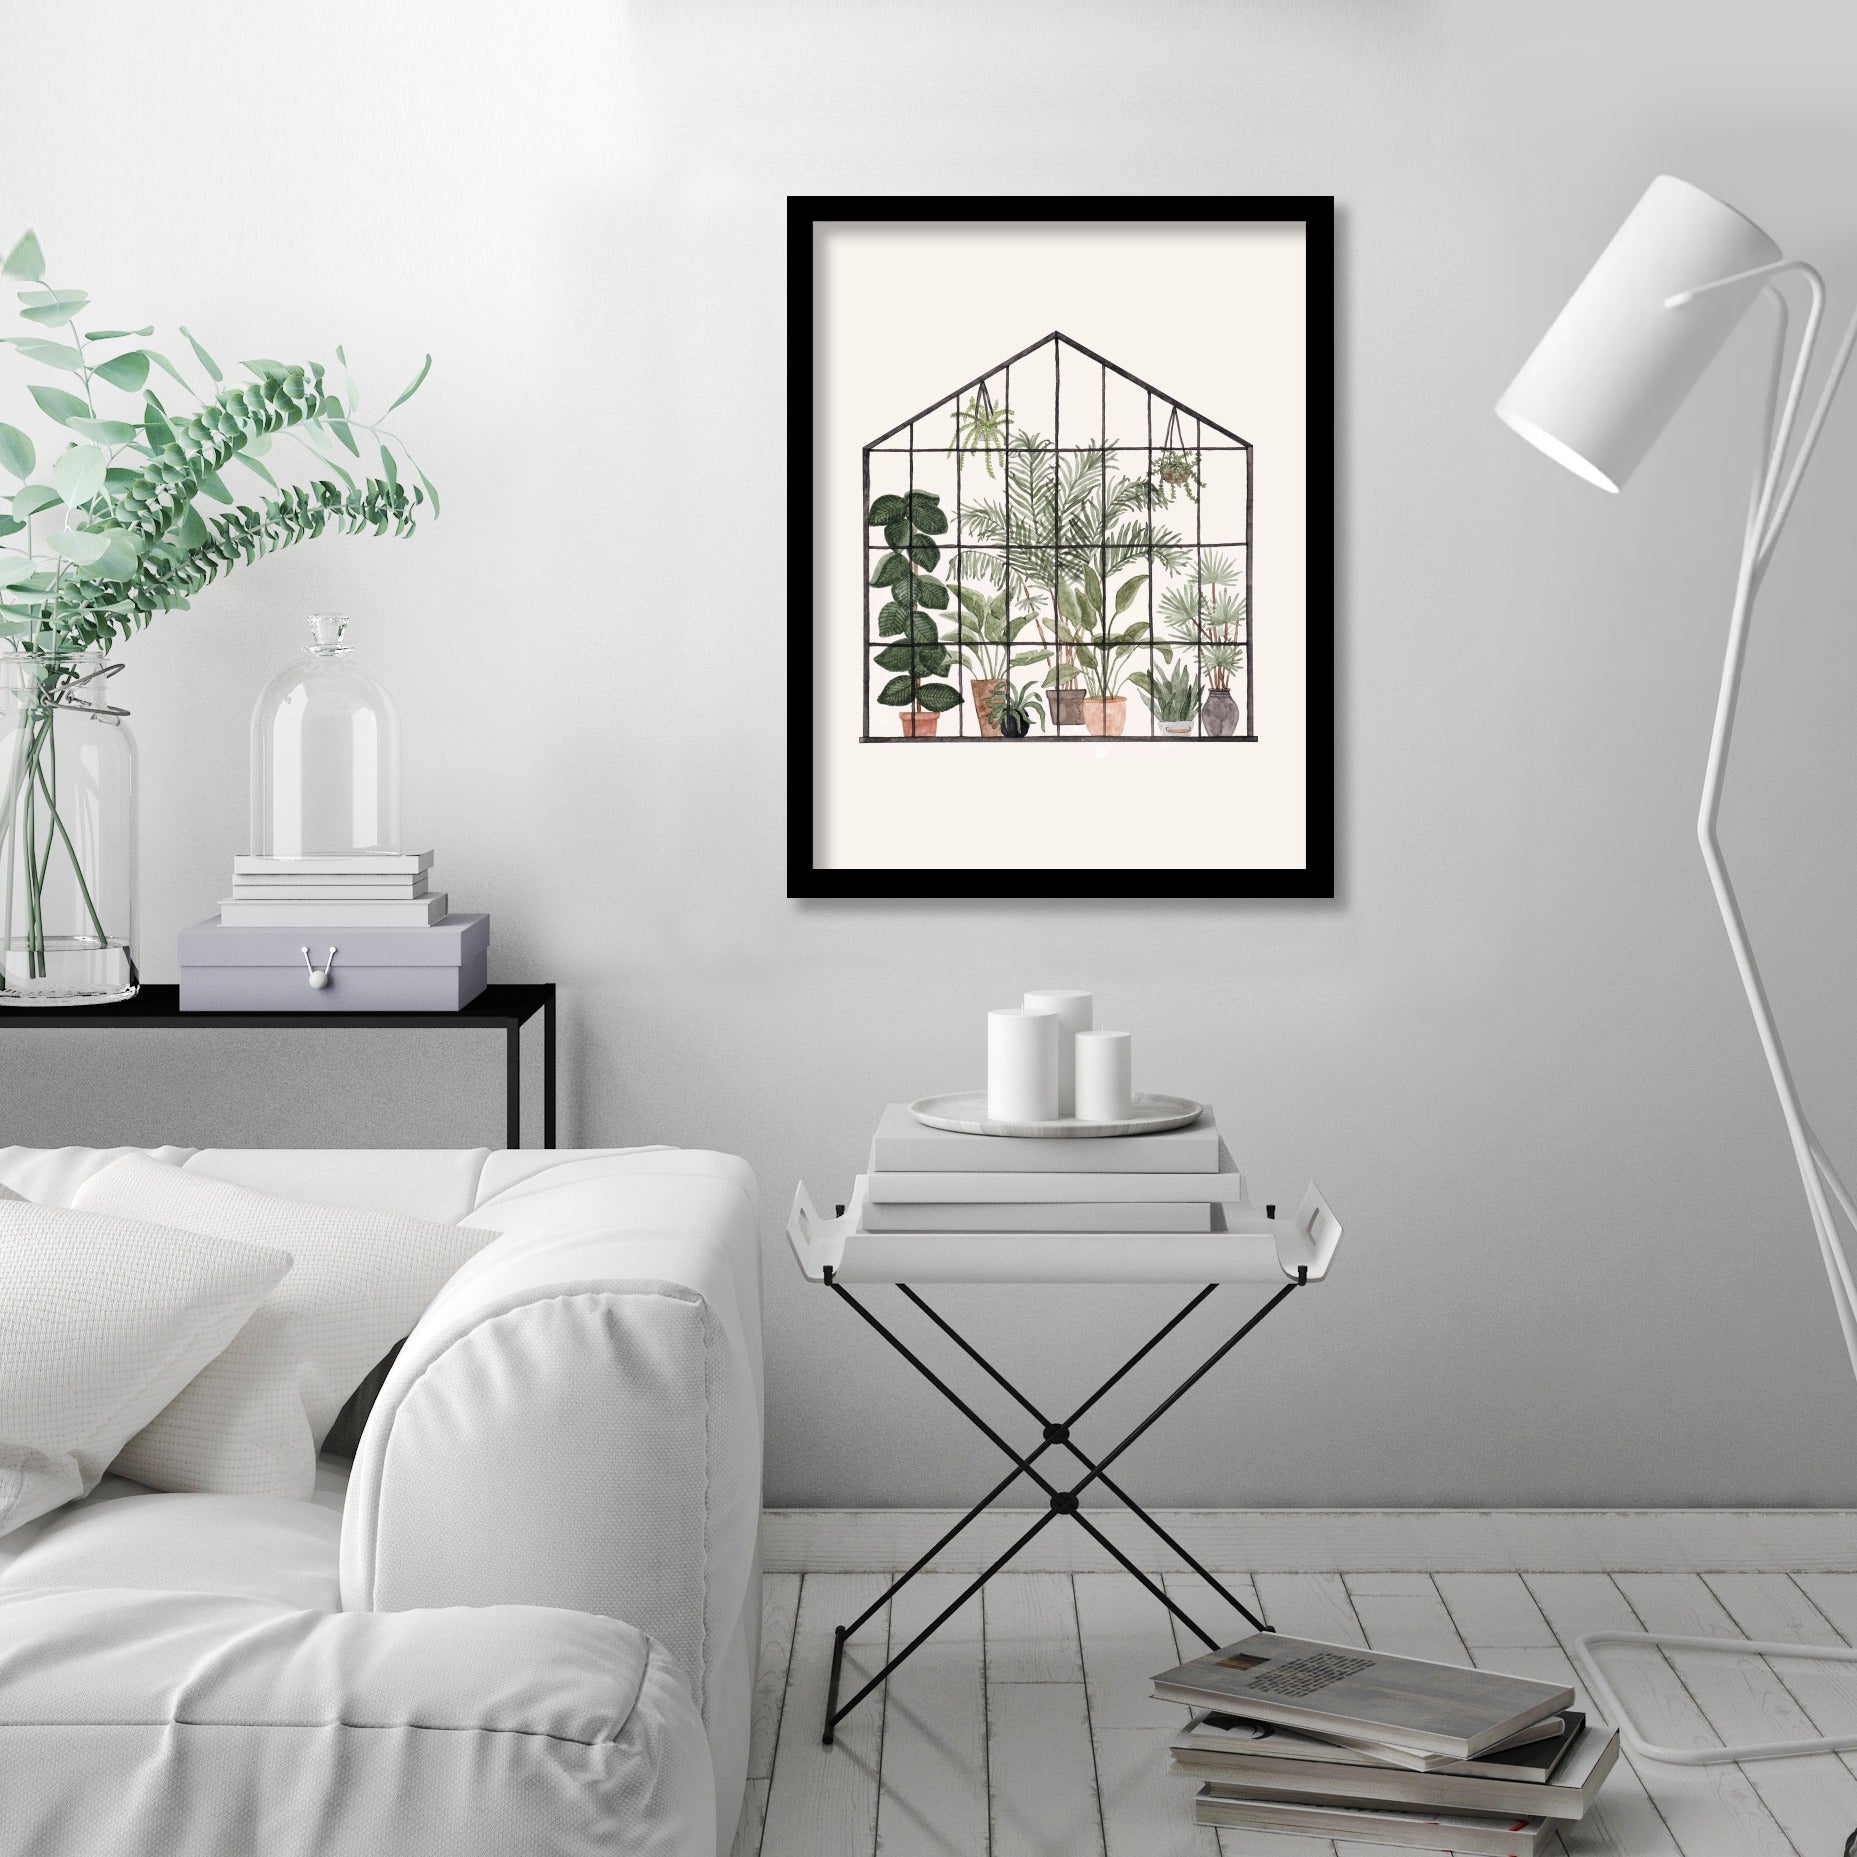 Greenhouse by Antonia Jurgens - Framed Print - Americanflat